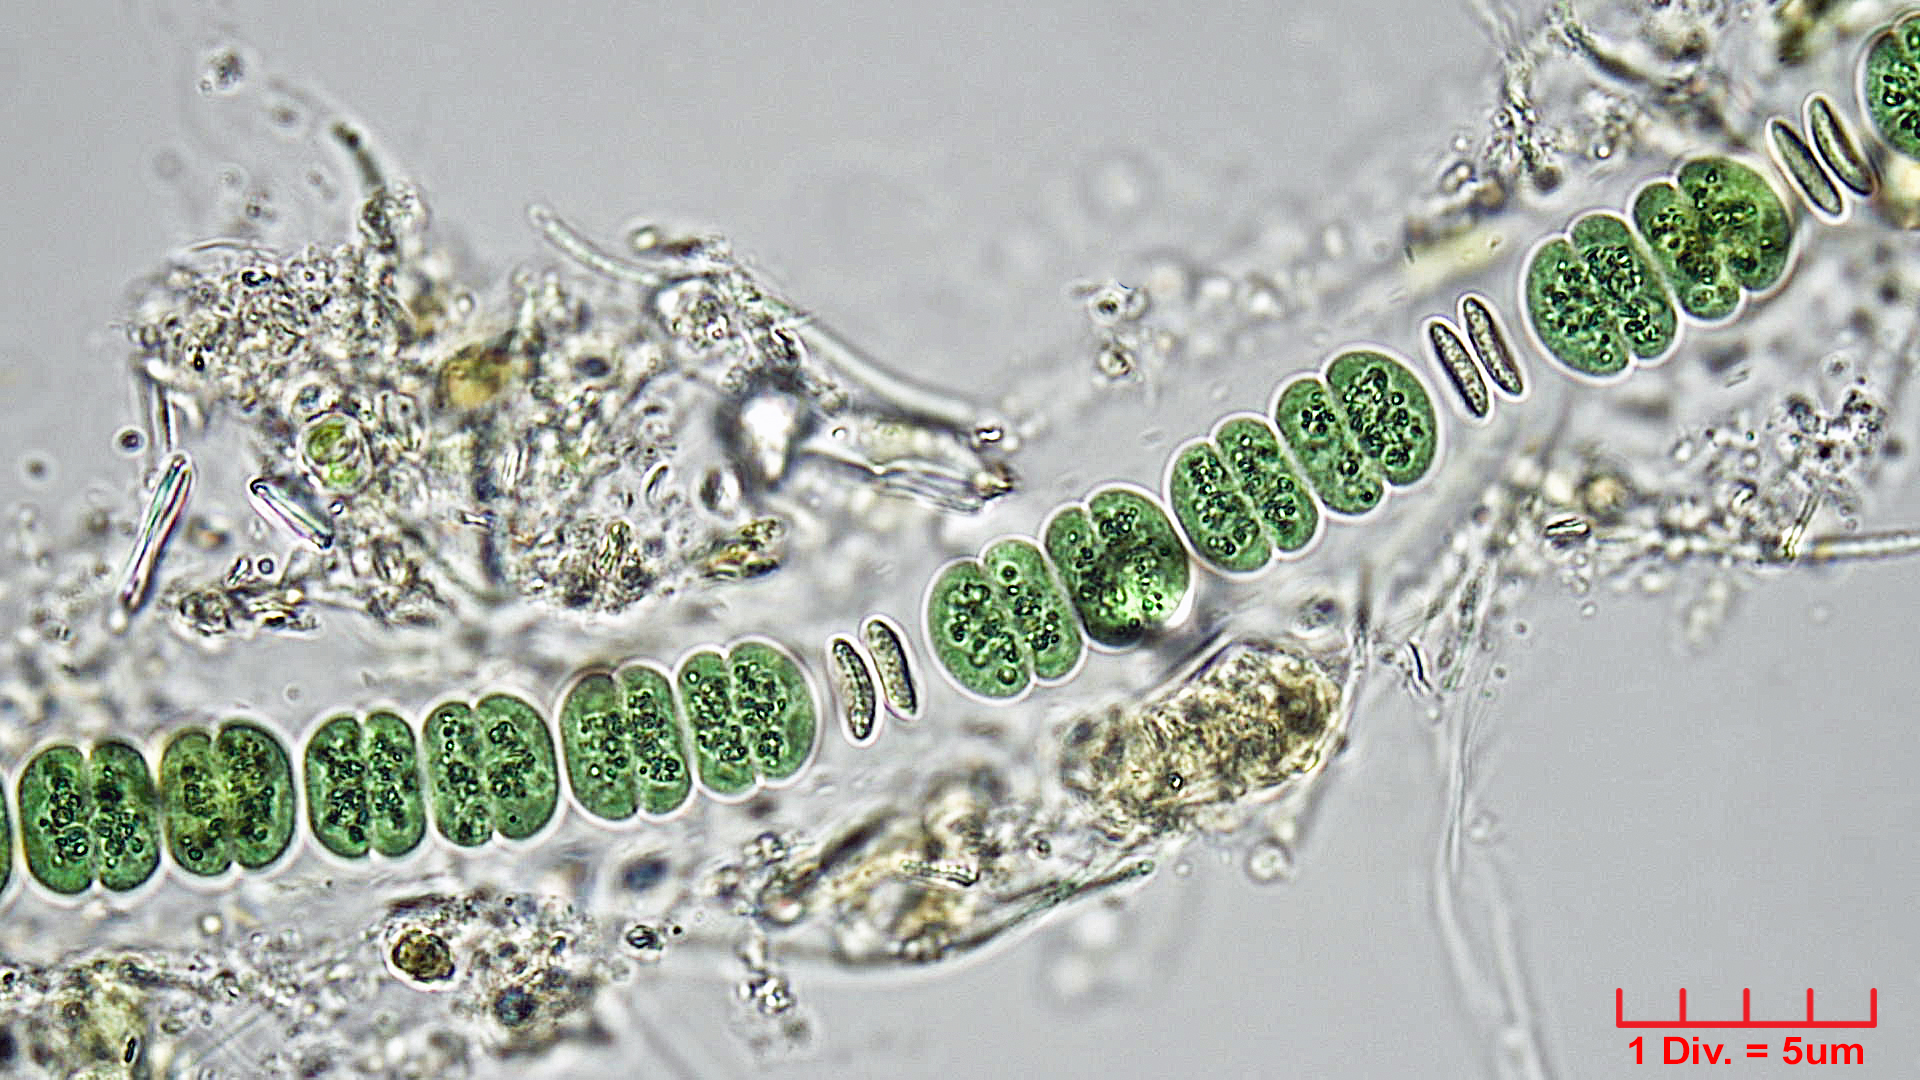 ././Cyanobacteria/Chroococcales/Cyanothricaceae/Johannesbaptistia/sp/jobap4.jpg